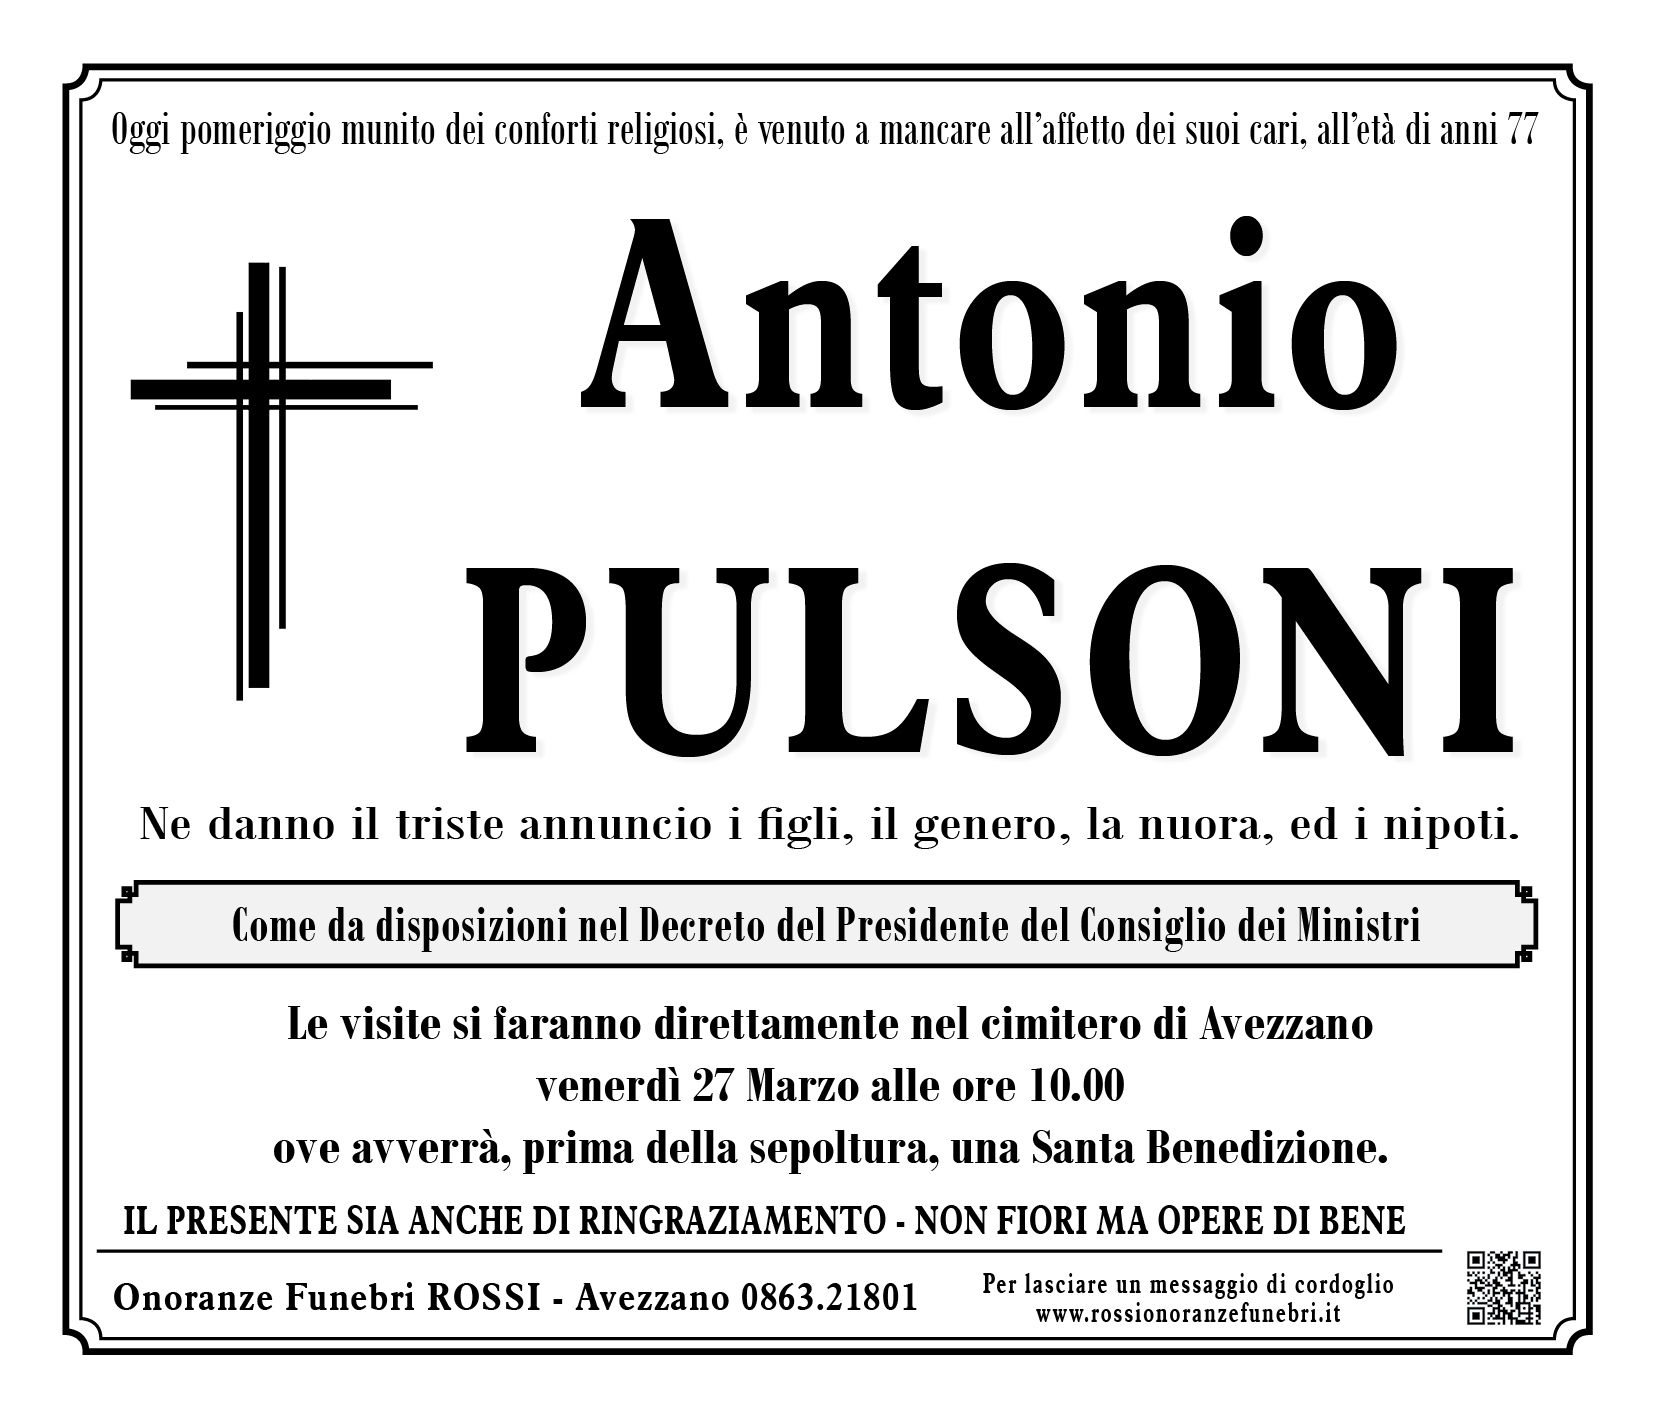 Antonio Pulsoni